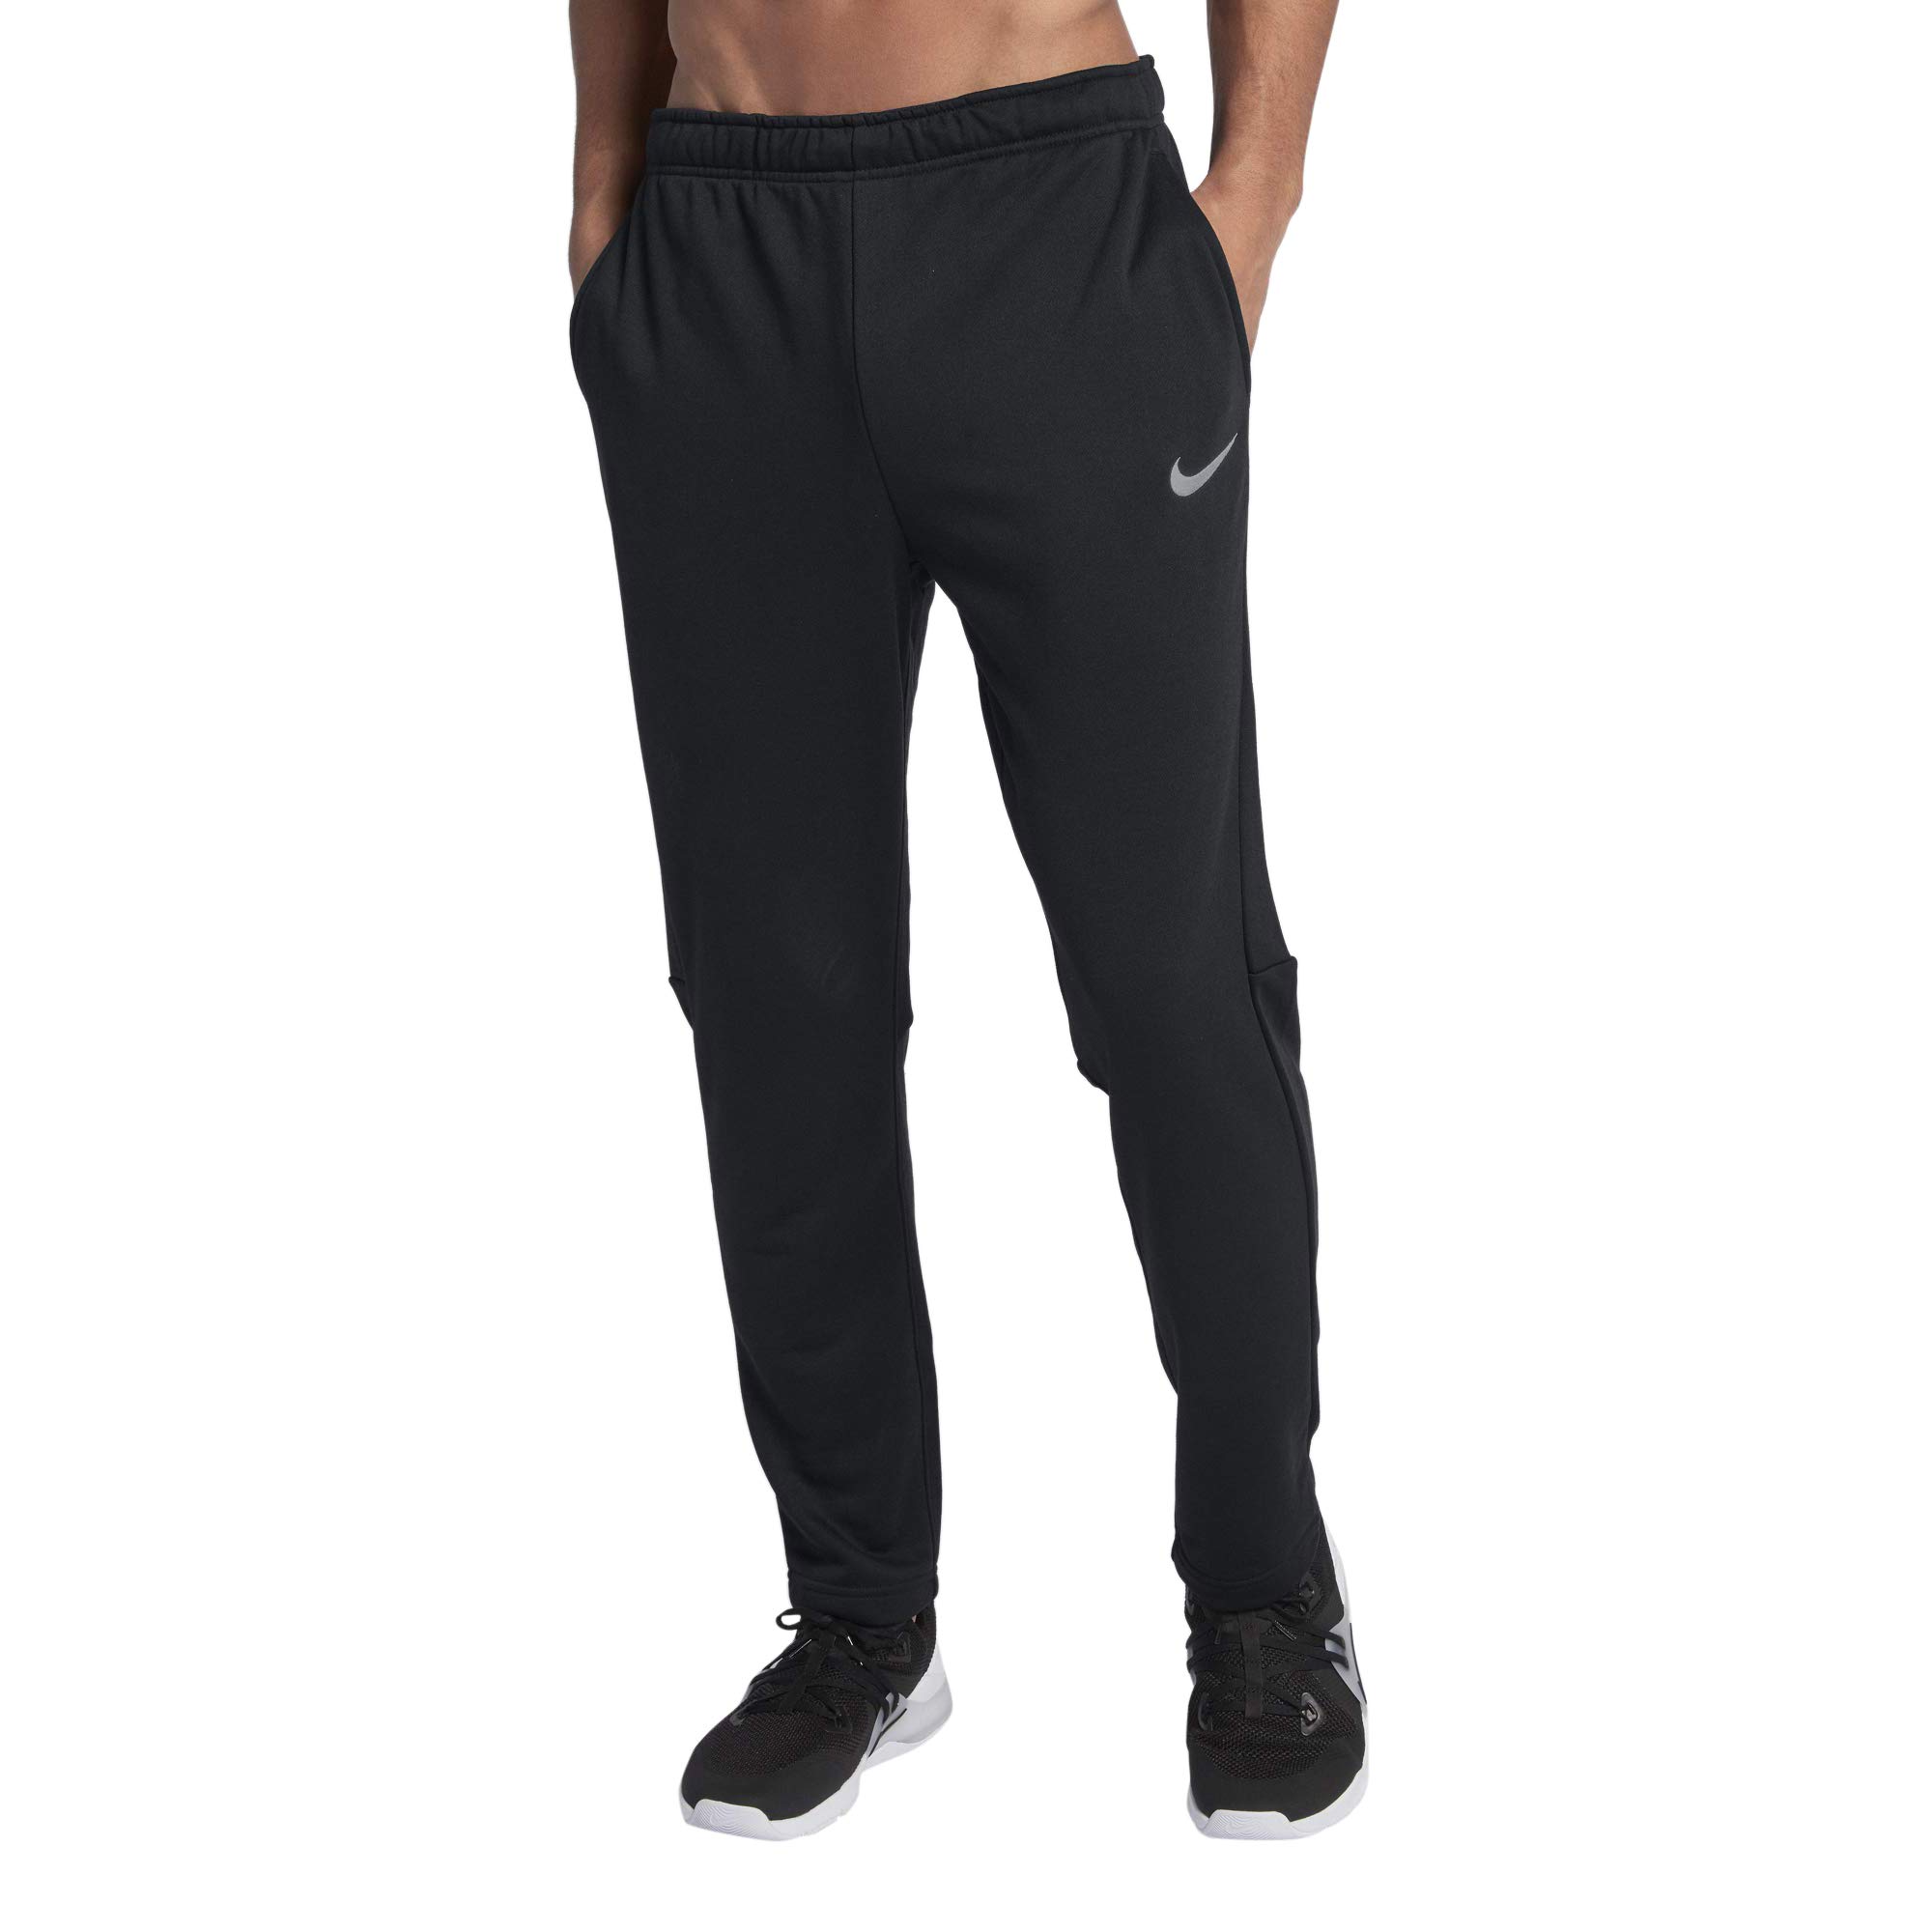 Nike Mens Dry Fleece Training Pants BlackWhite Large